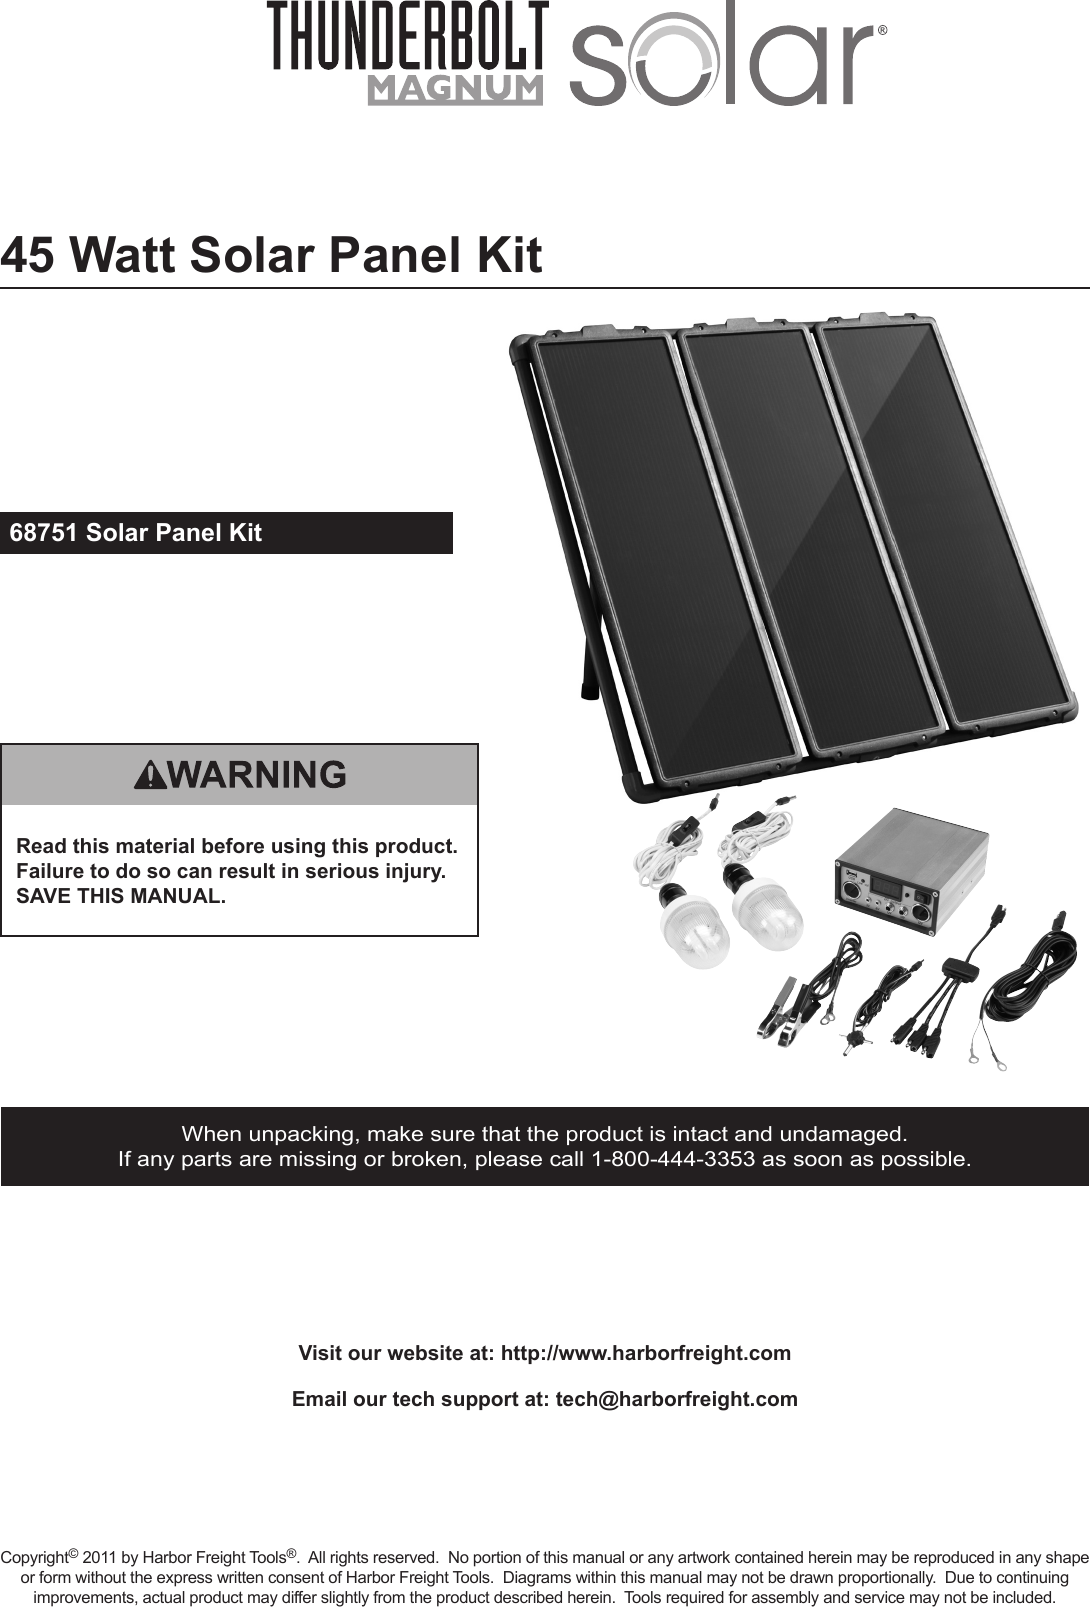 Harbor Freight 45 Watt Solar Panel Kit Product Manual